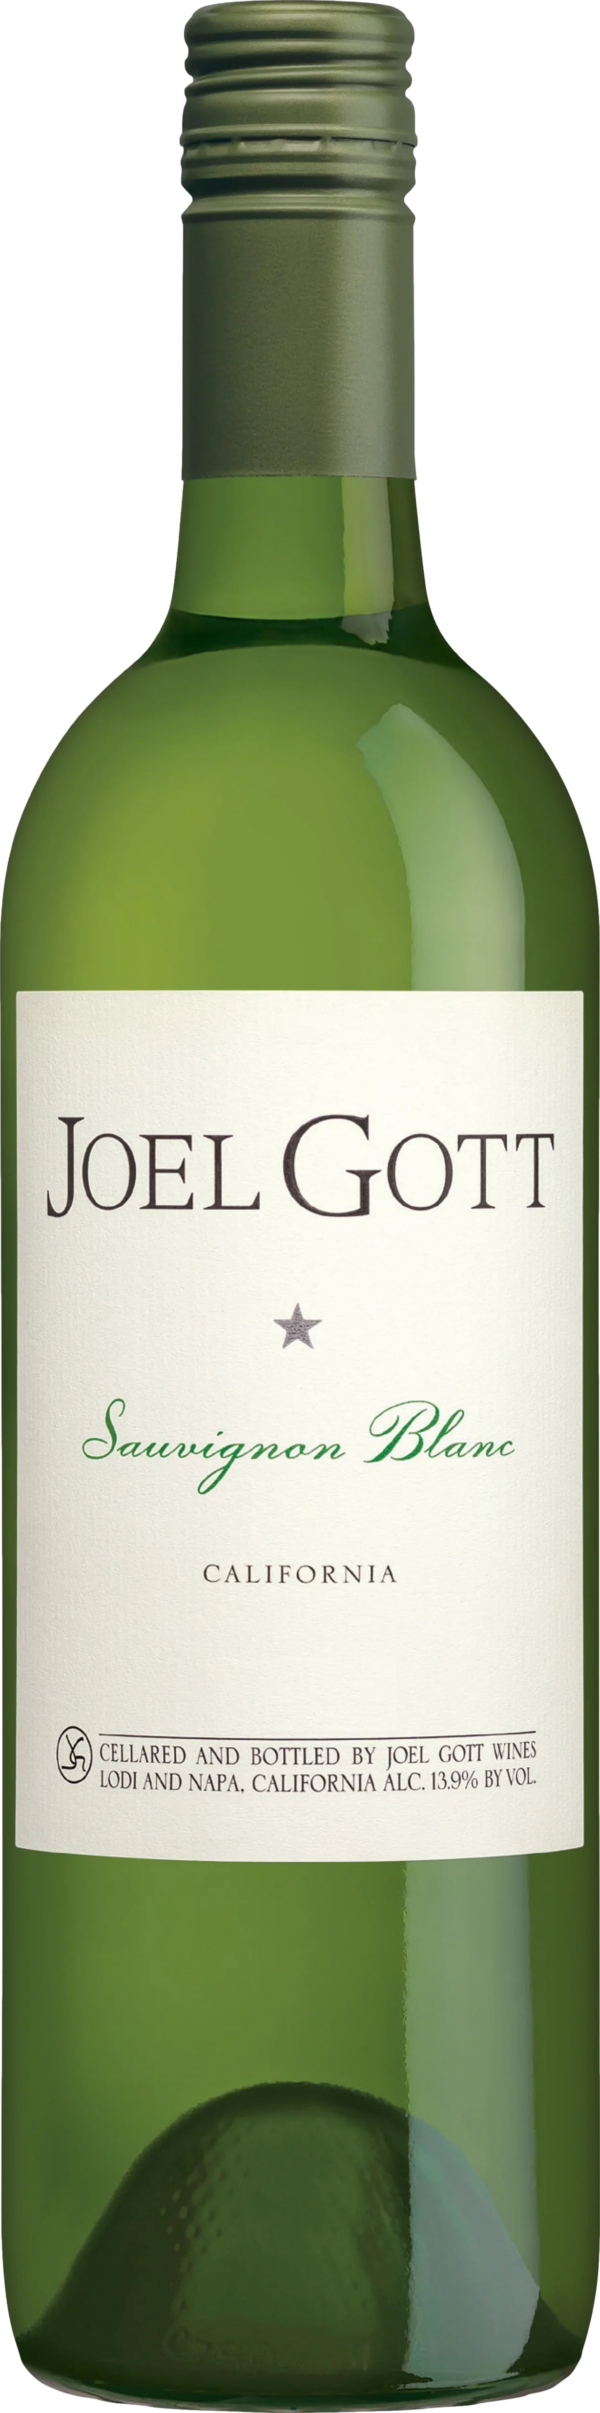 Product image of Joel Gott Sauvignon Blanc 2021 from 8wines